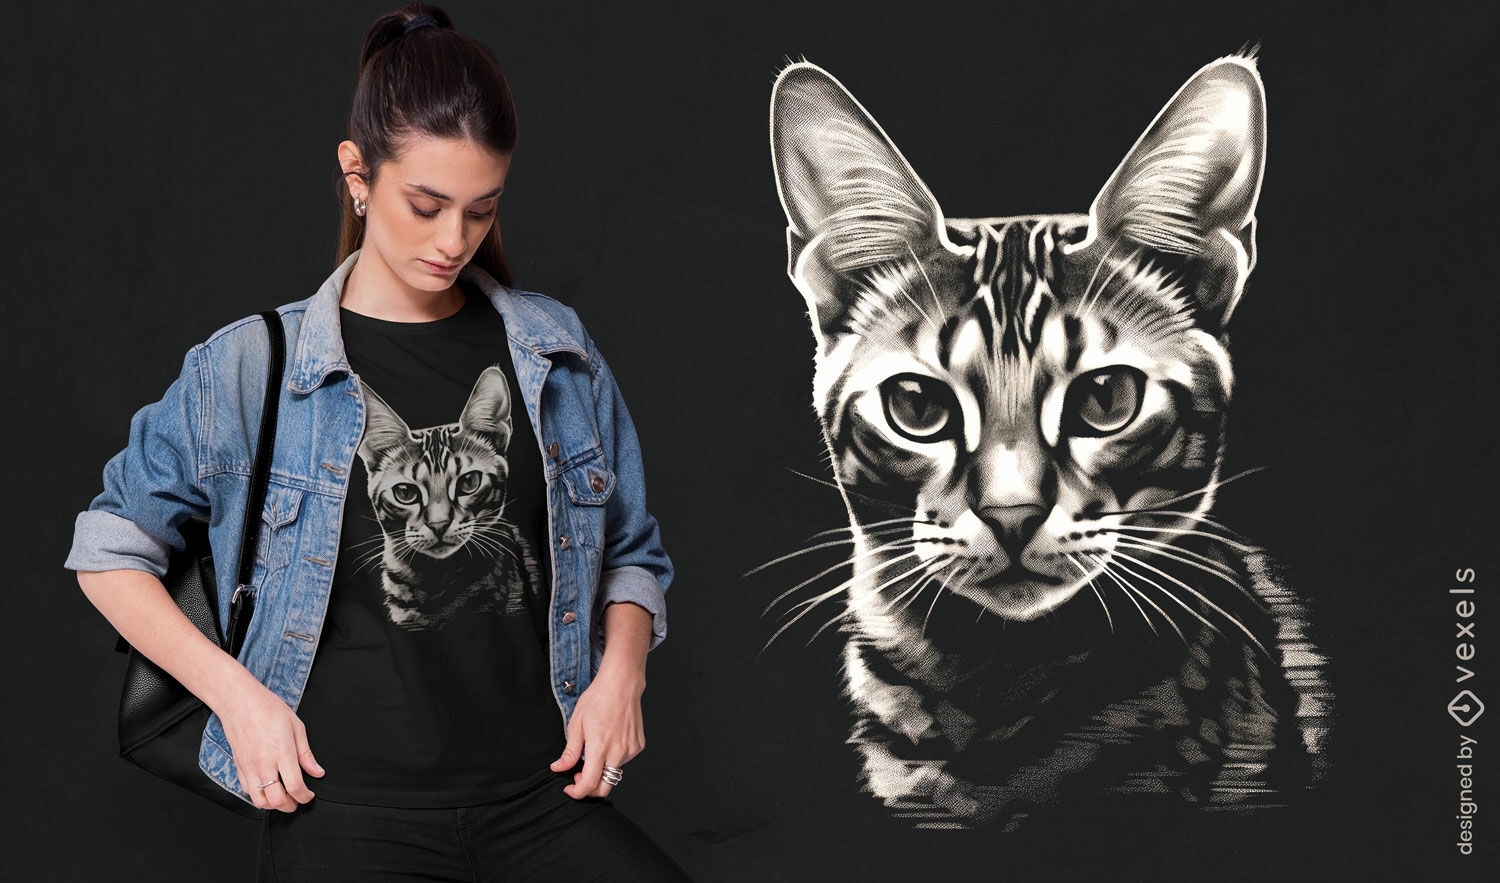 Diseño detallado de camiseta con cara de gato.